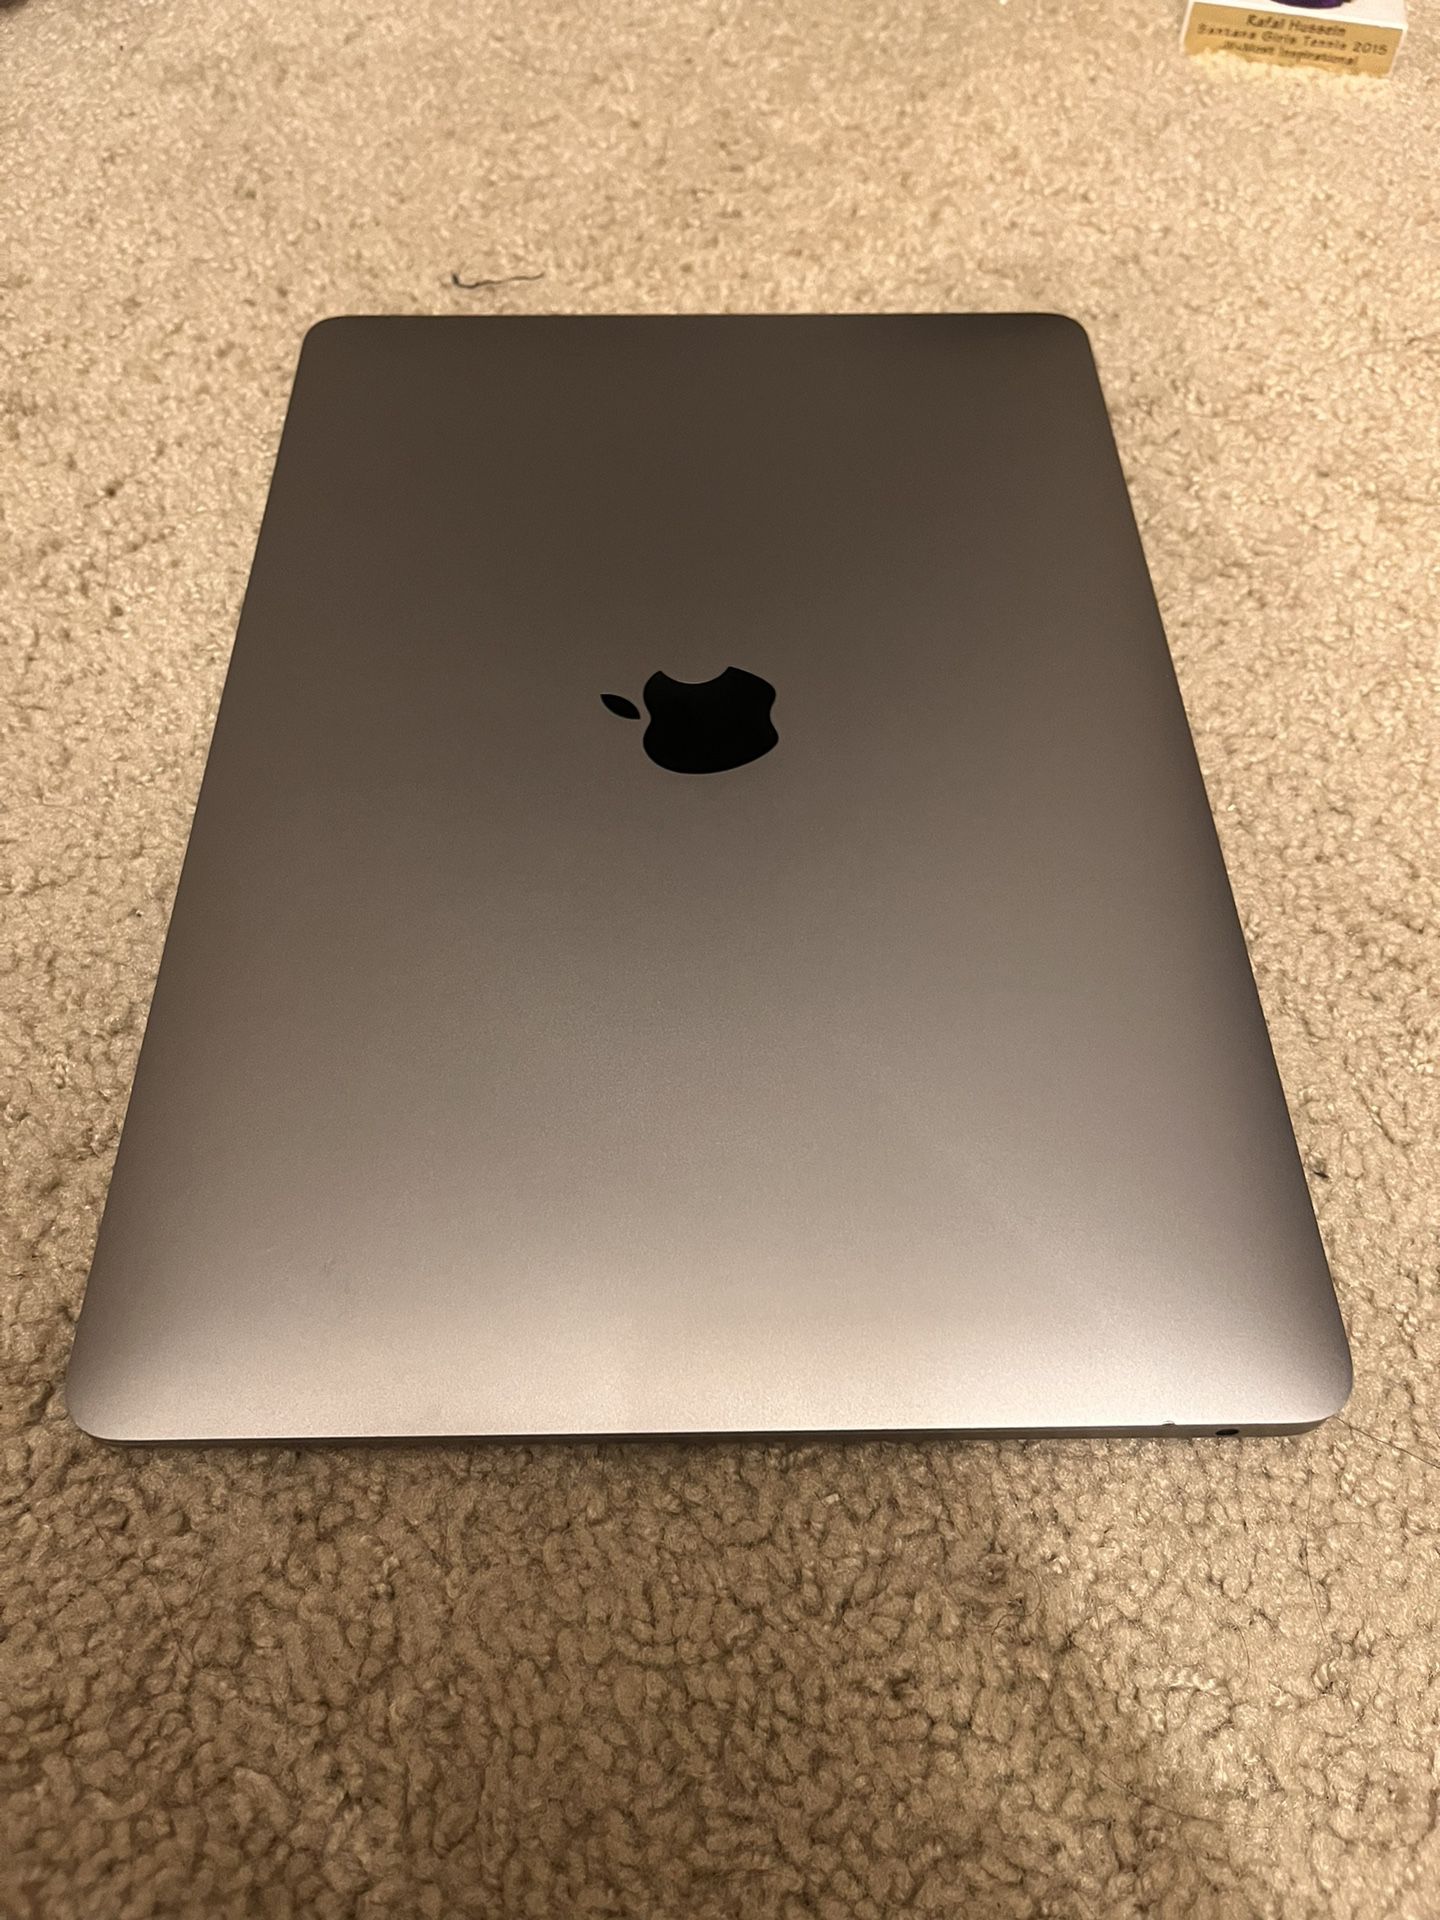 Apple MacBook Air "Core i5" 1.6 13" (True Tone, 2019) grey 